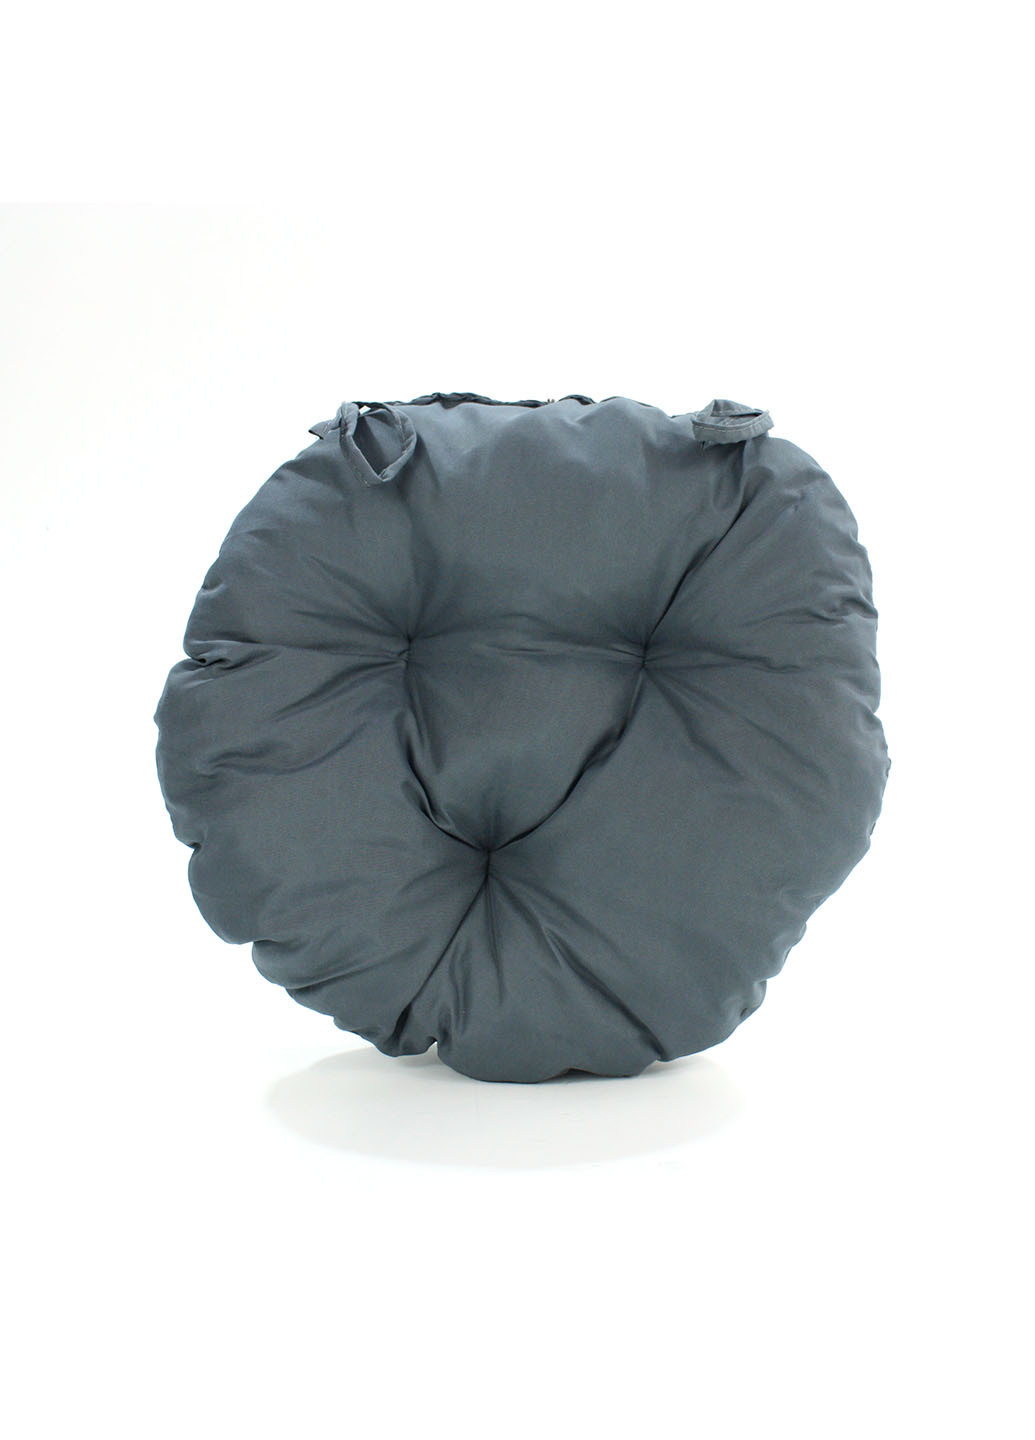 Кругла подушка на стілець МІ0008 40см борт 7см Еней-Плюс (258596518)